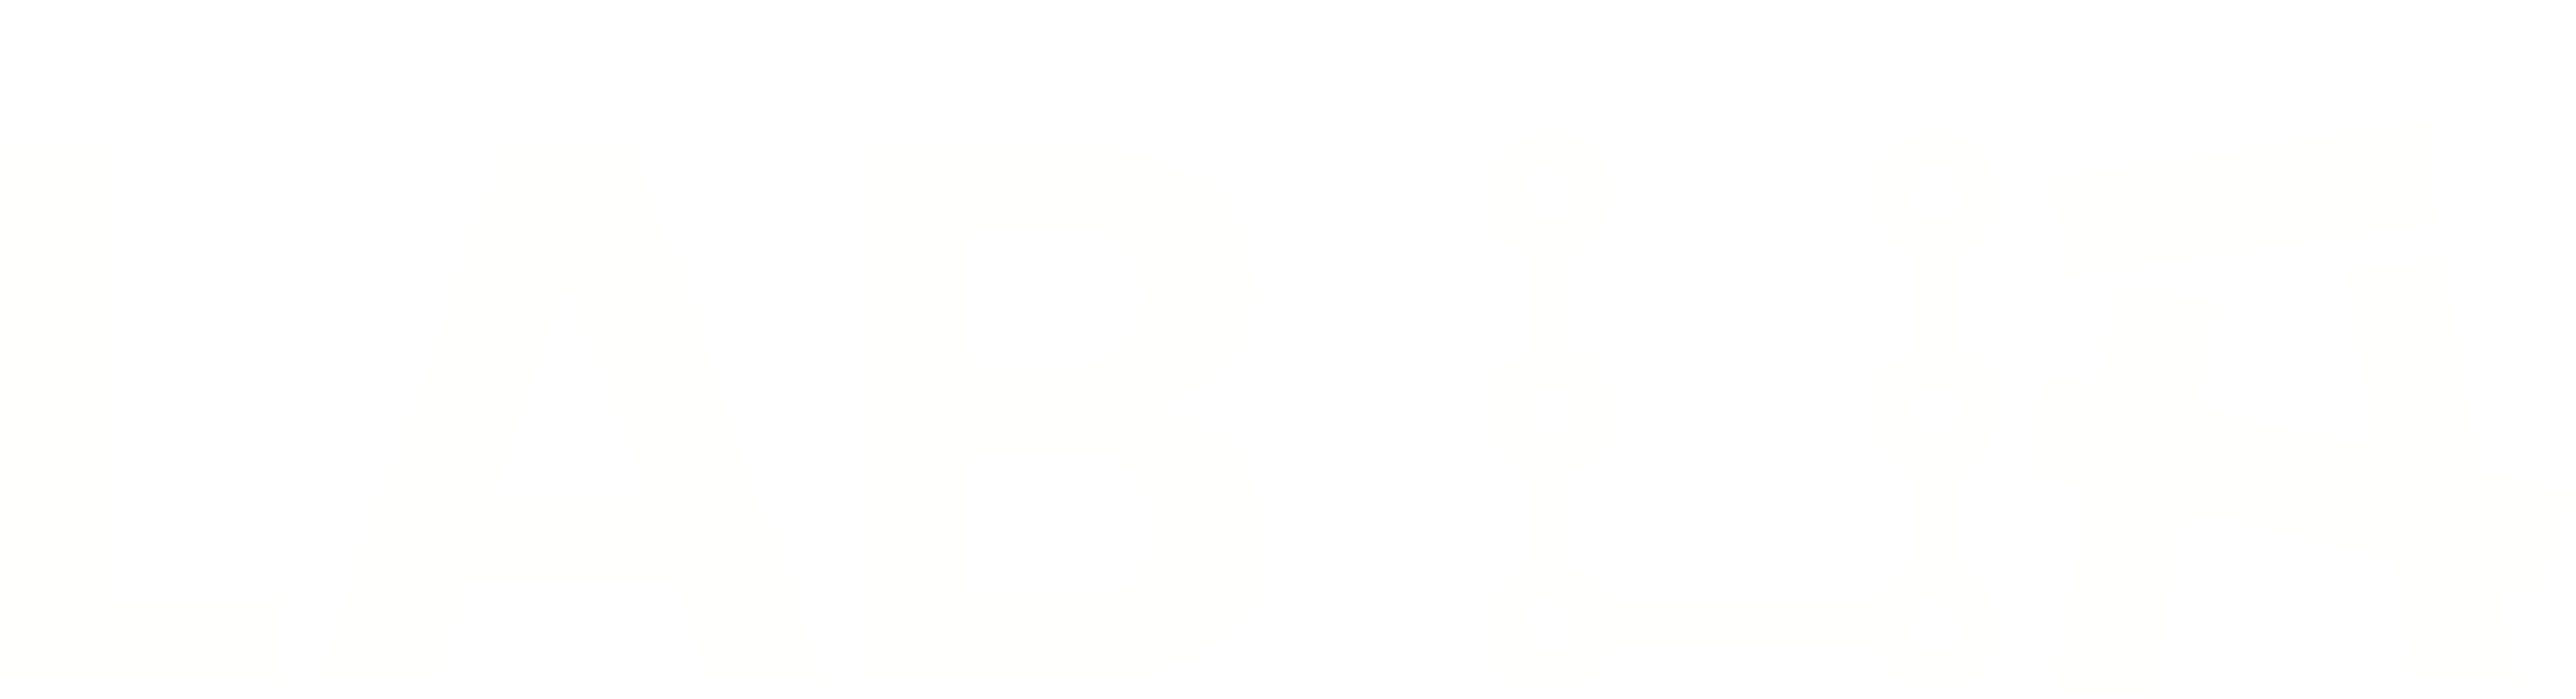 logo_labua